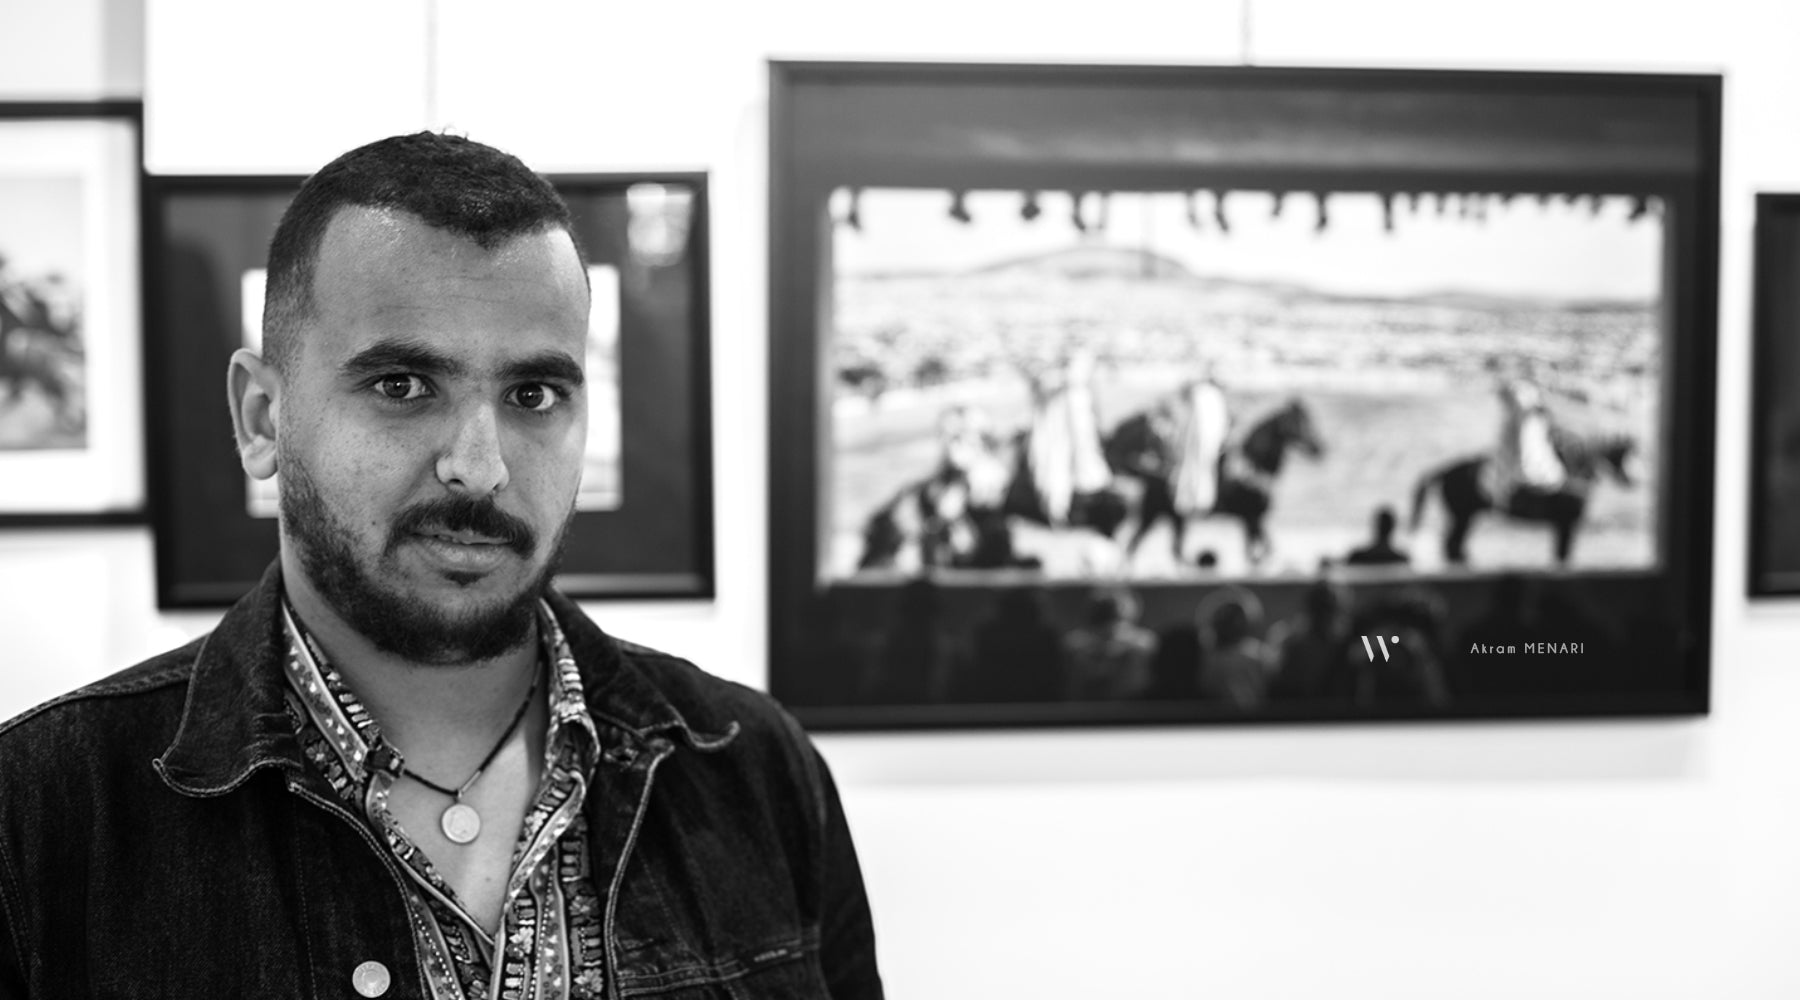 Akram Menari, Artiste Photographe Algerien, Elwani, Algerie.